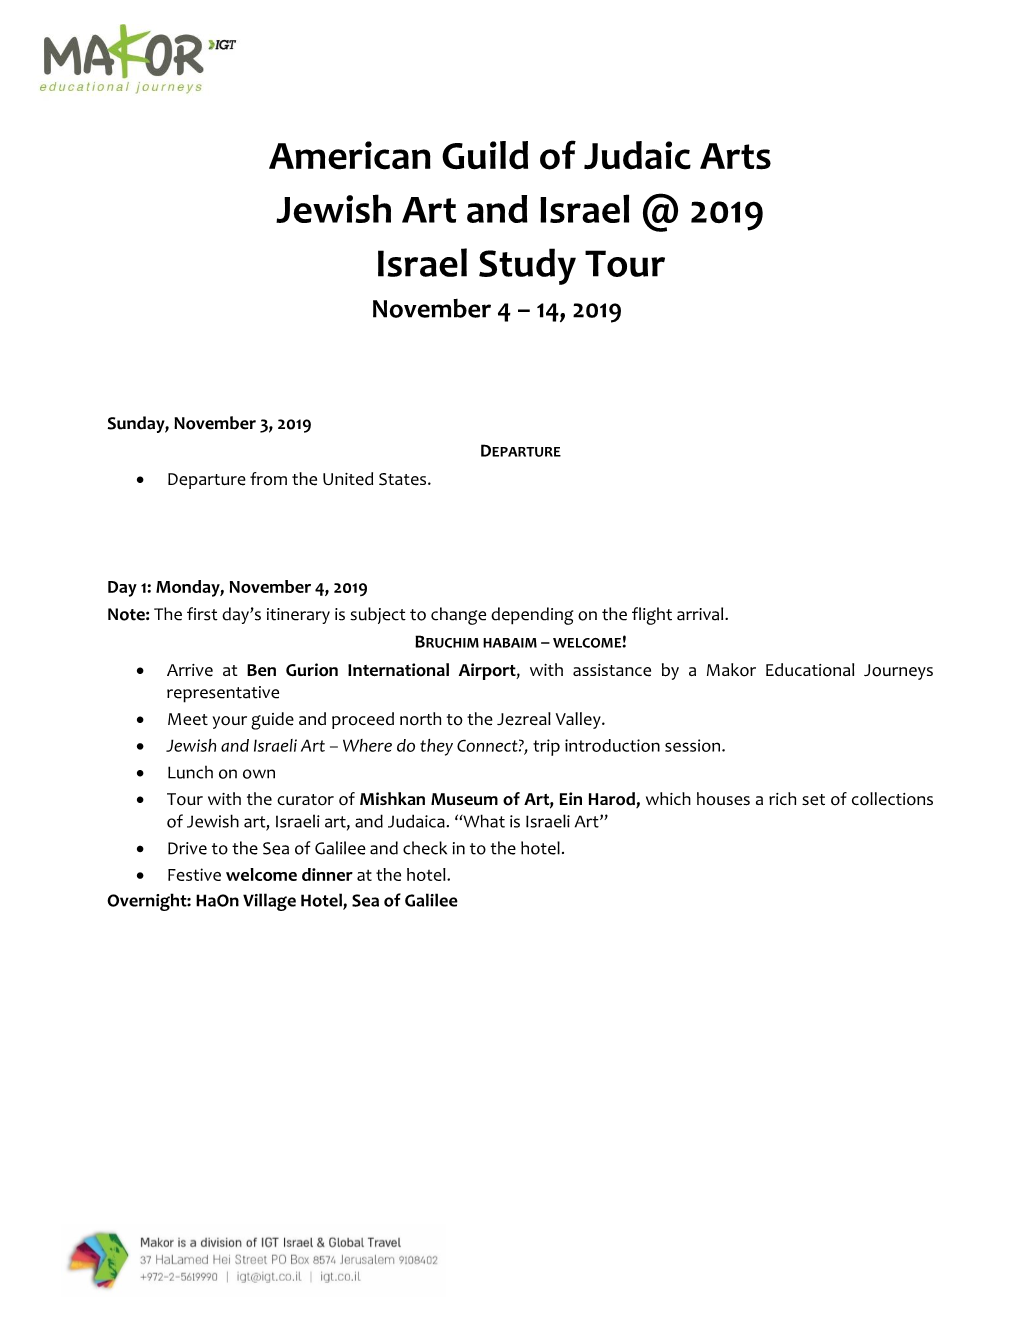 American Guild of Judaic Arts Jewish Art and Israel @ 2019 Israel Study Tour November 4 – 14, 2019